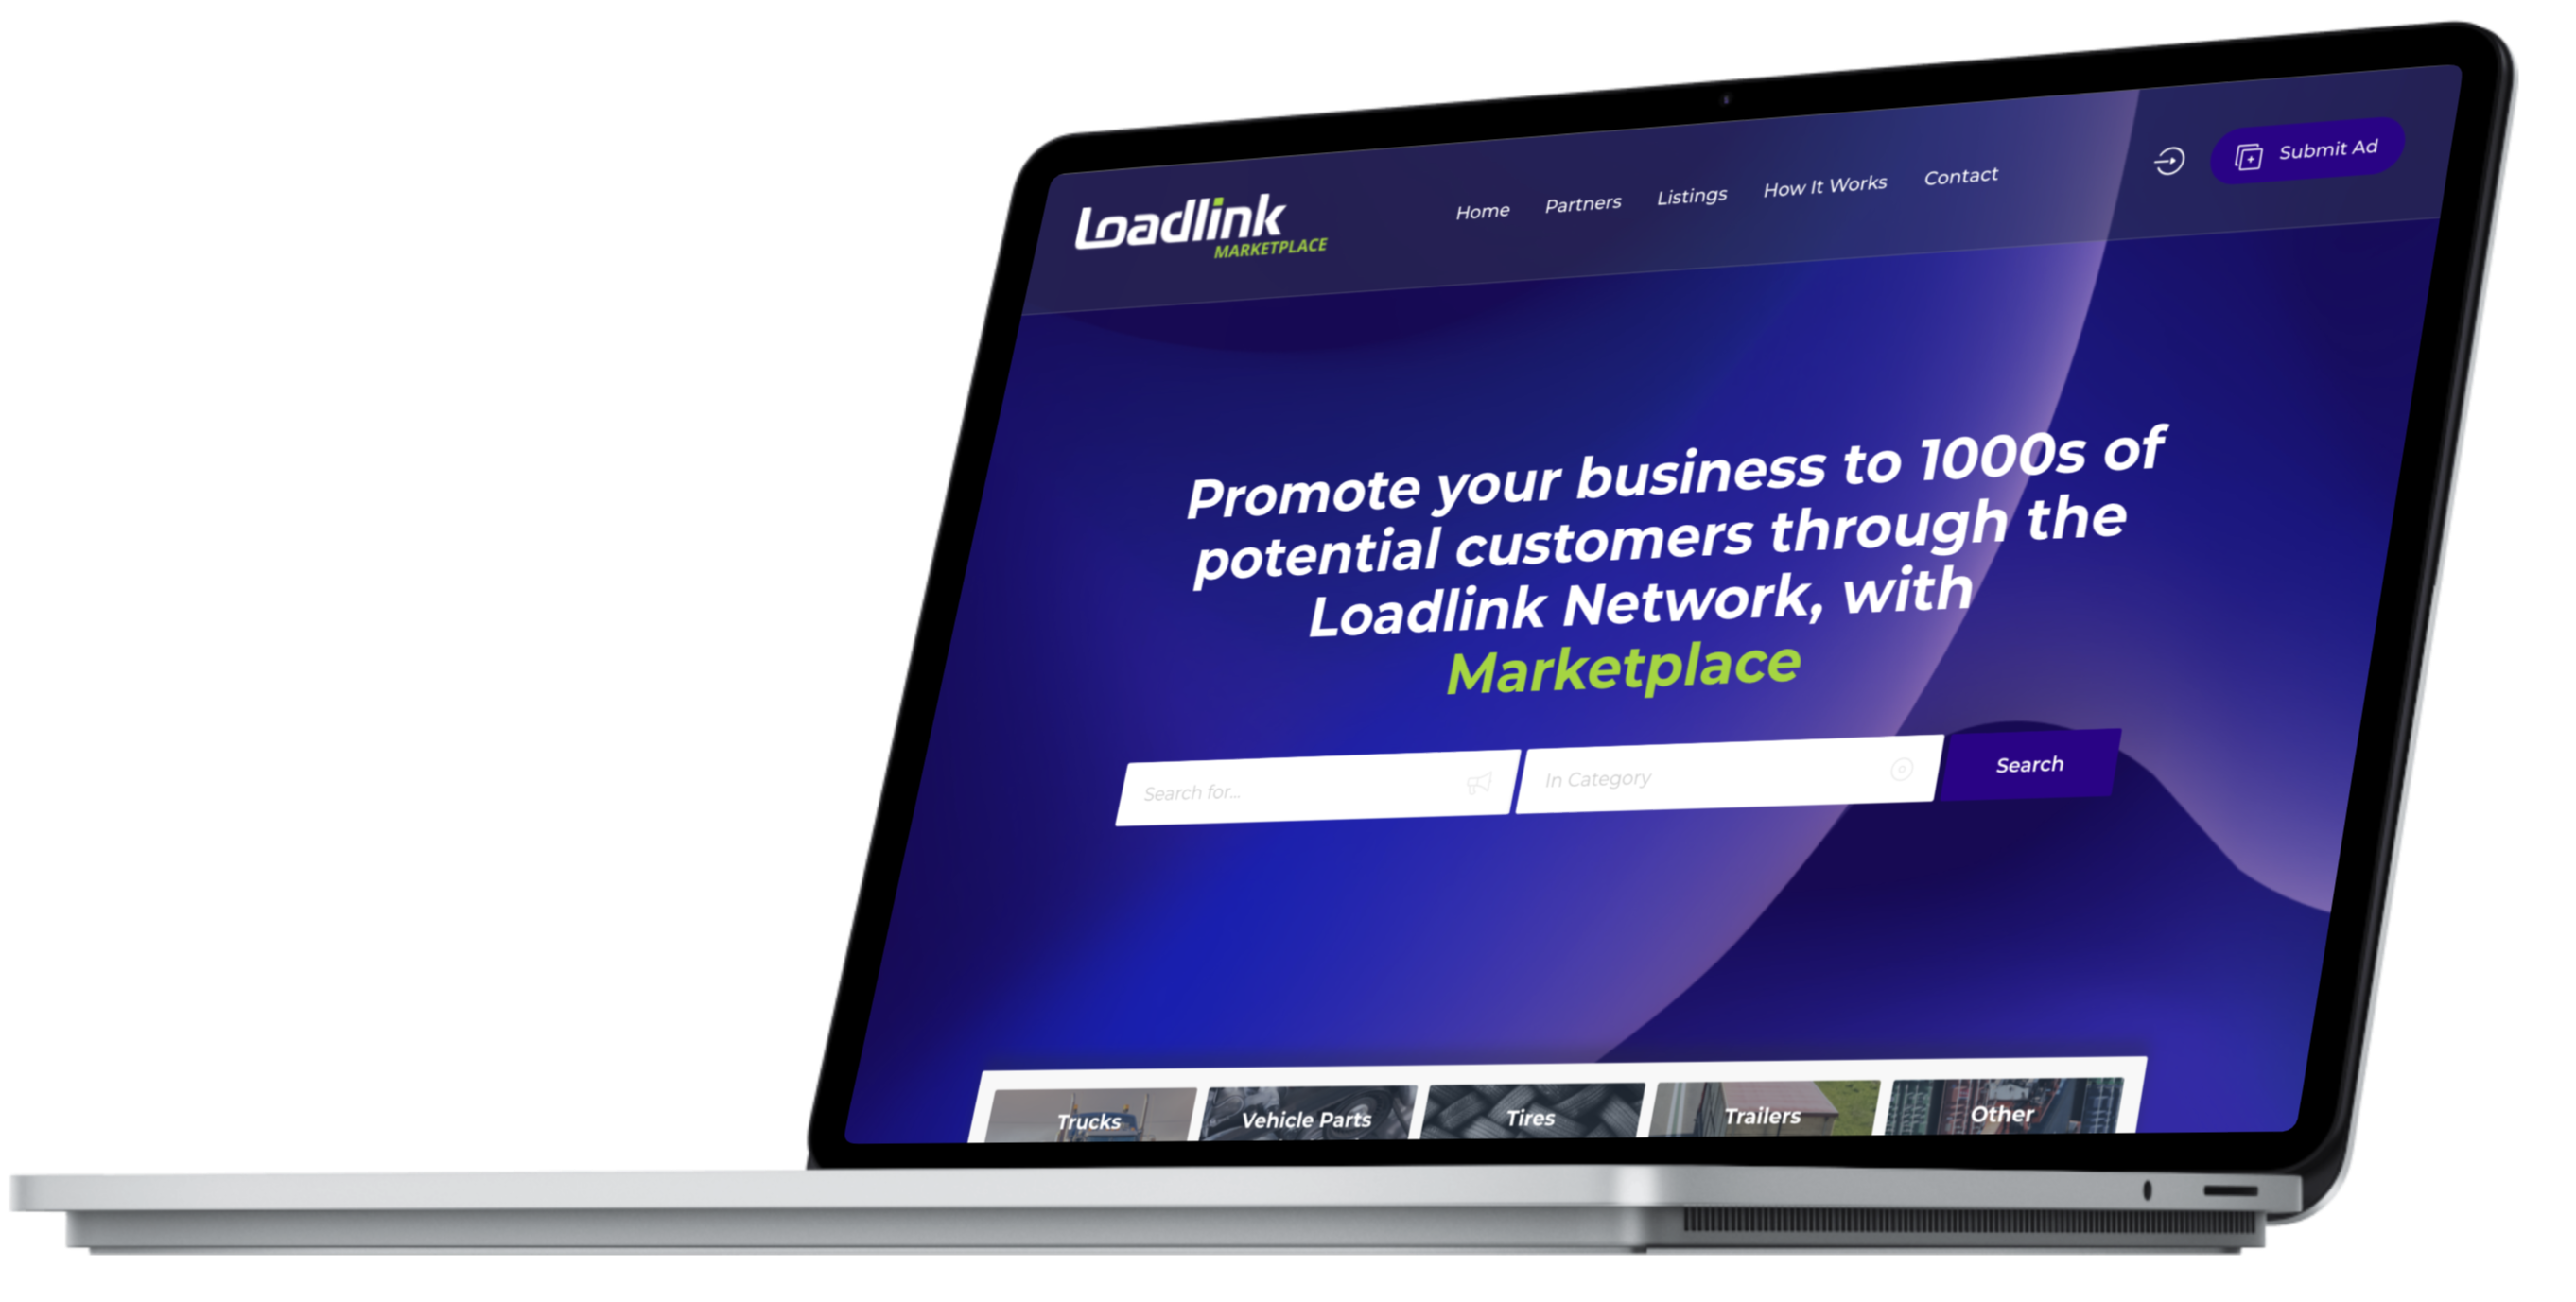 Opened laptop with Loadlink Marketplace user interface